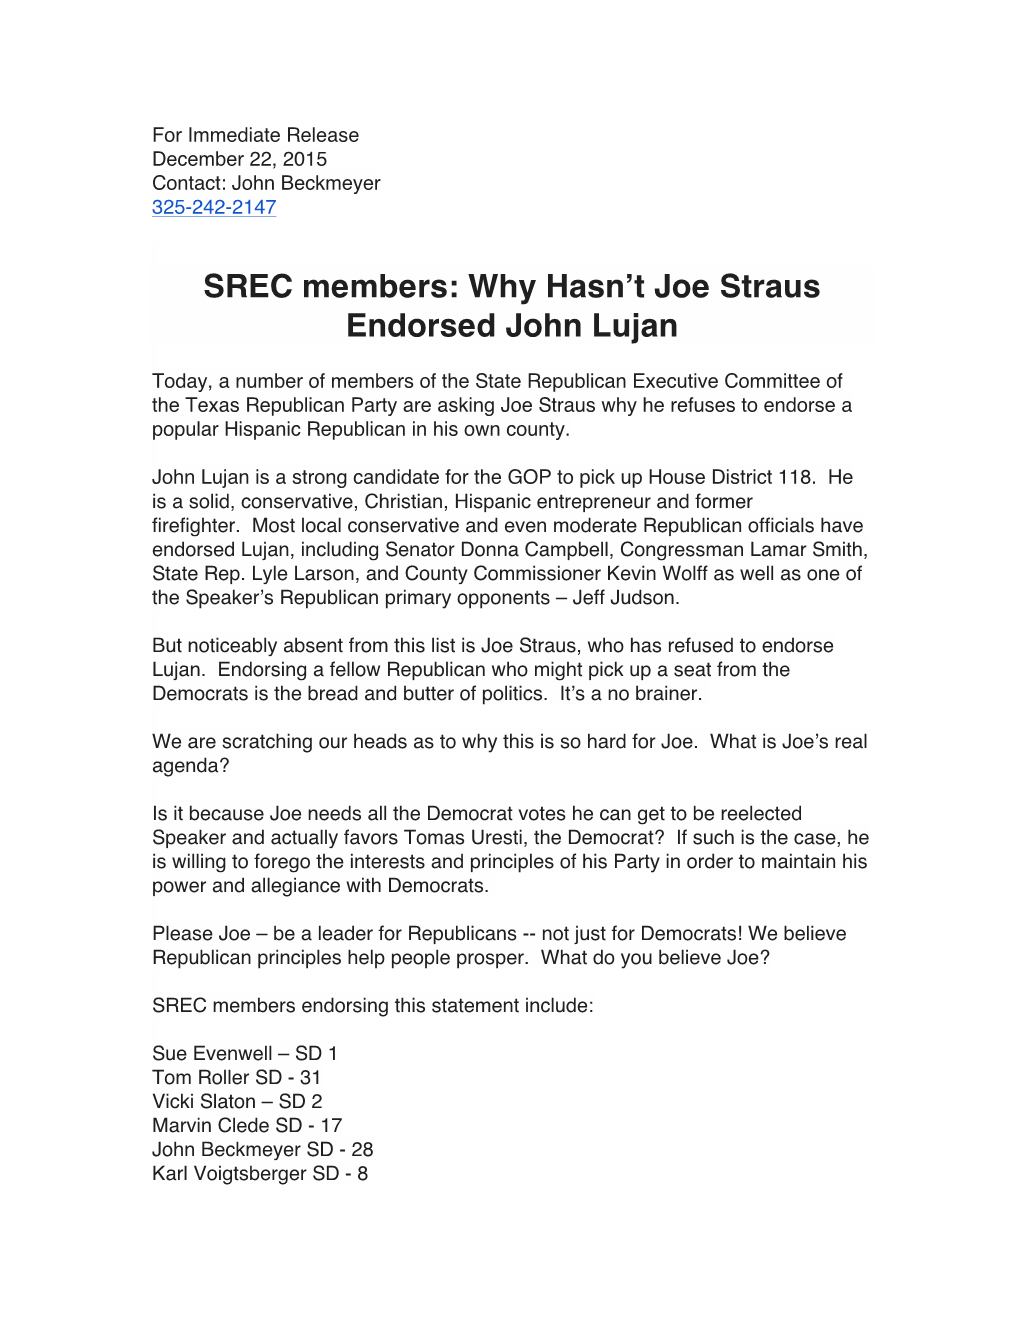 SREC Members: Why Hasn't Joe Straus Endorsed John Lujan